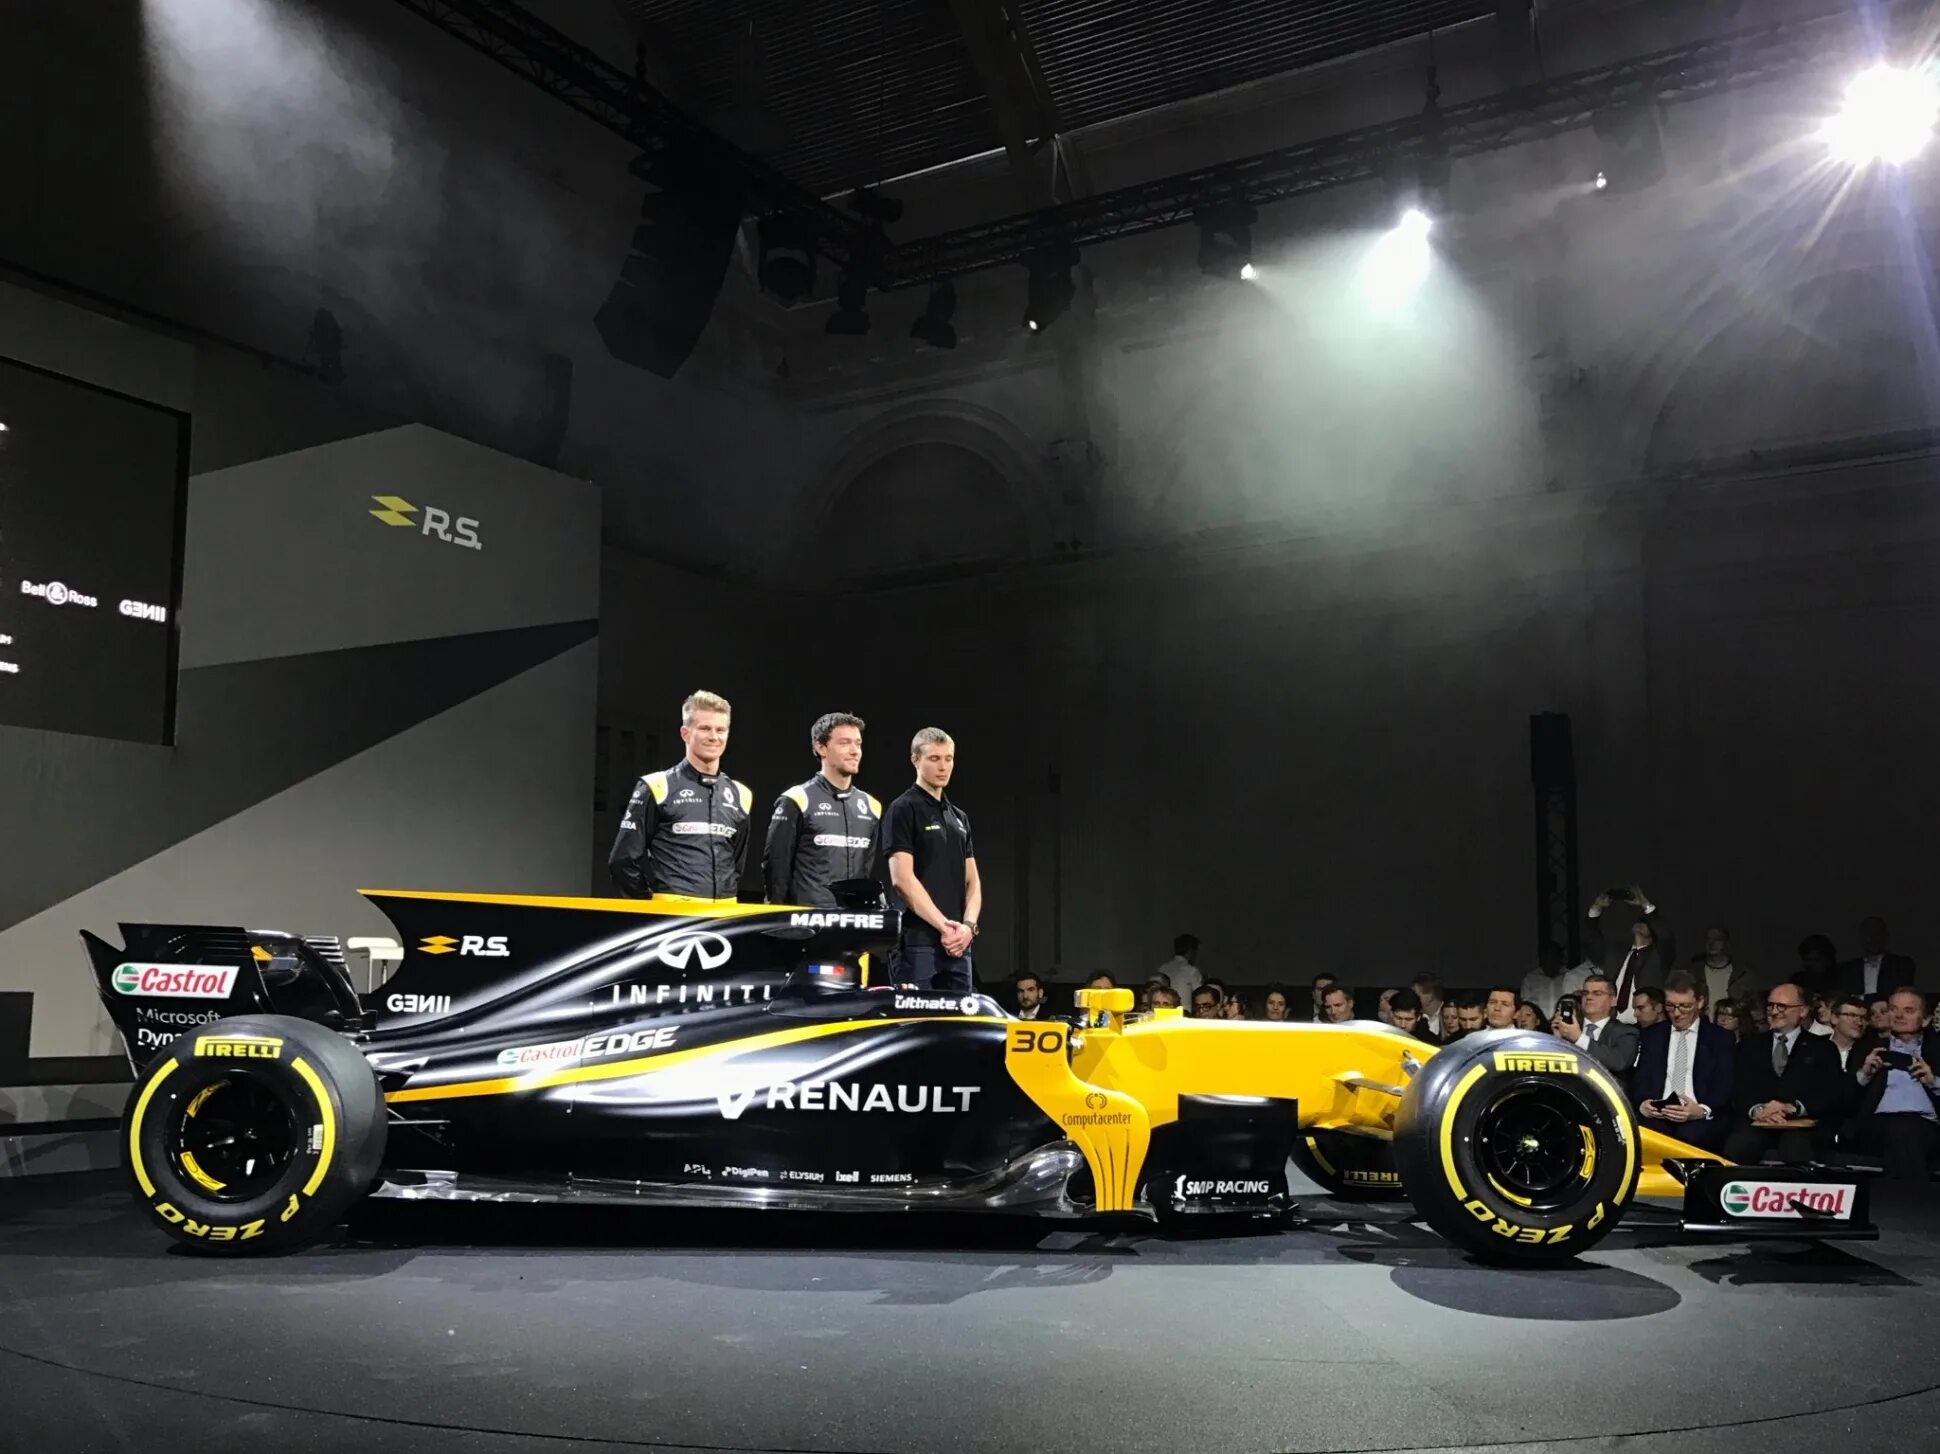 1 2017 года. Болиды f1 Renault. Renault f1 2017. Renault Sport f1 Team. Renault f1 Team 2011.